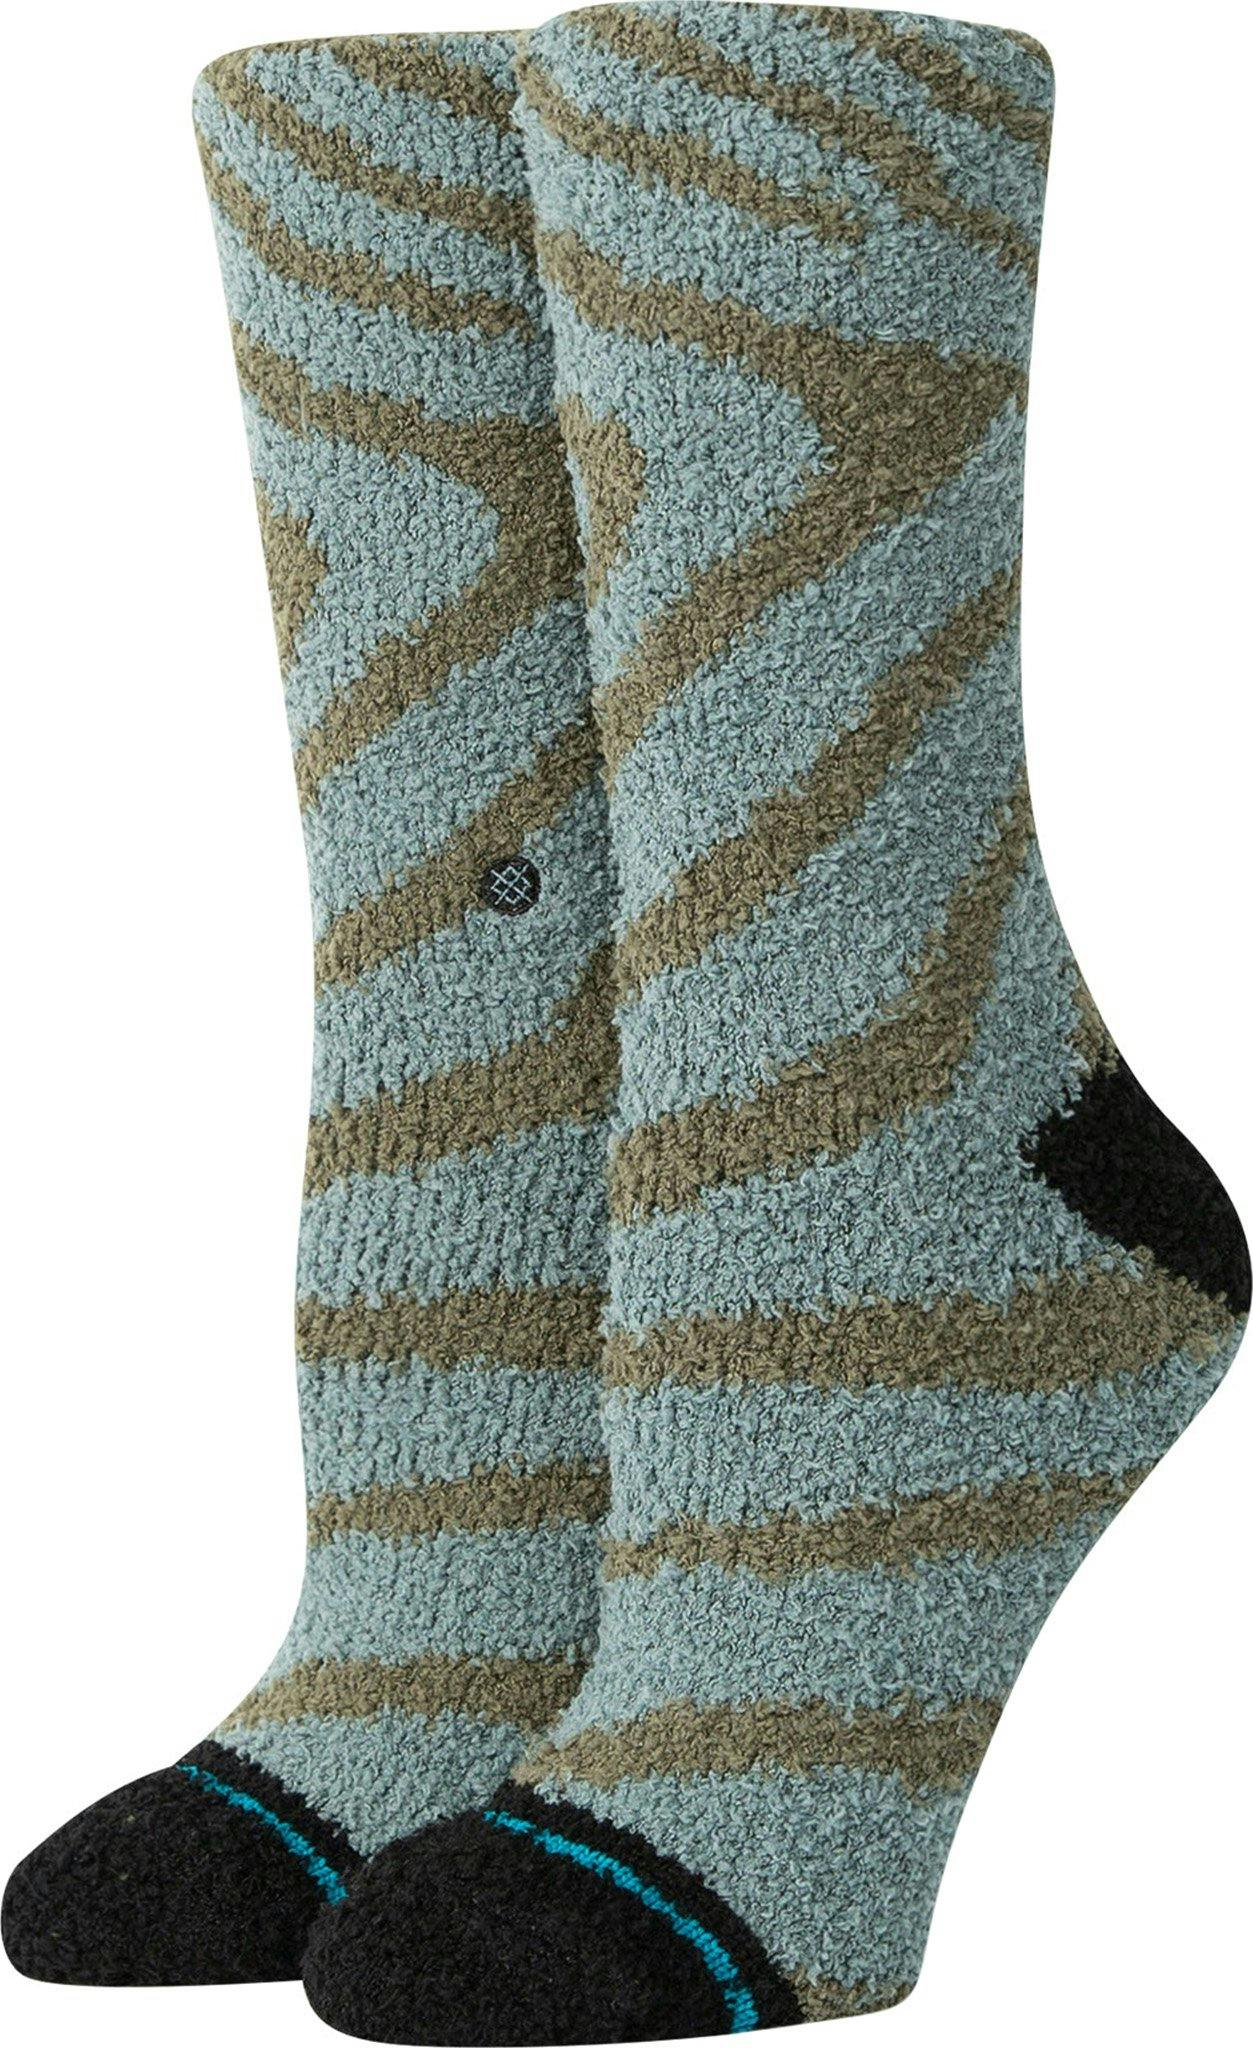 Product image for Night Owl Crew Socks - Women's